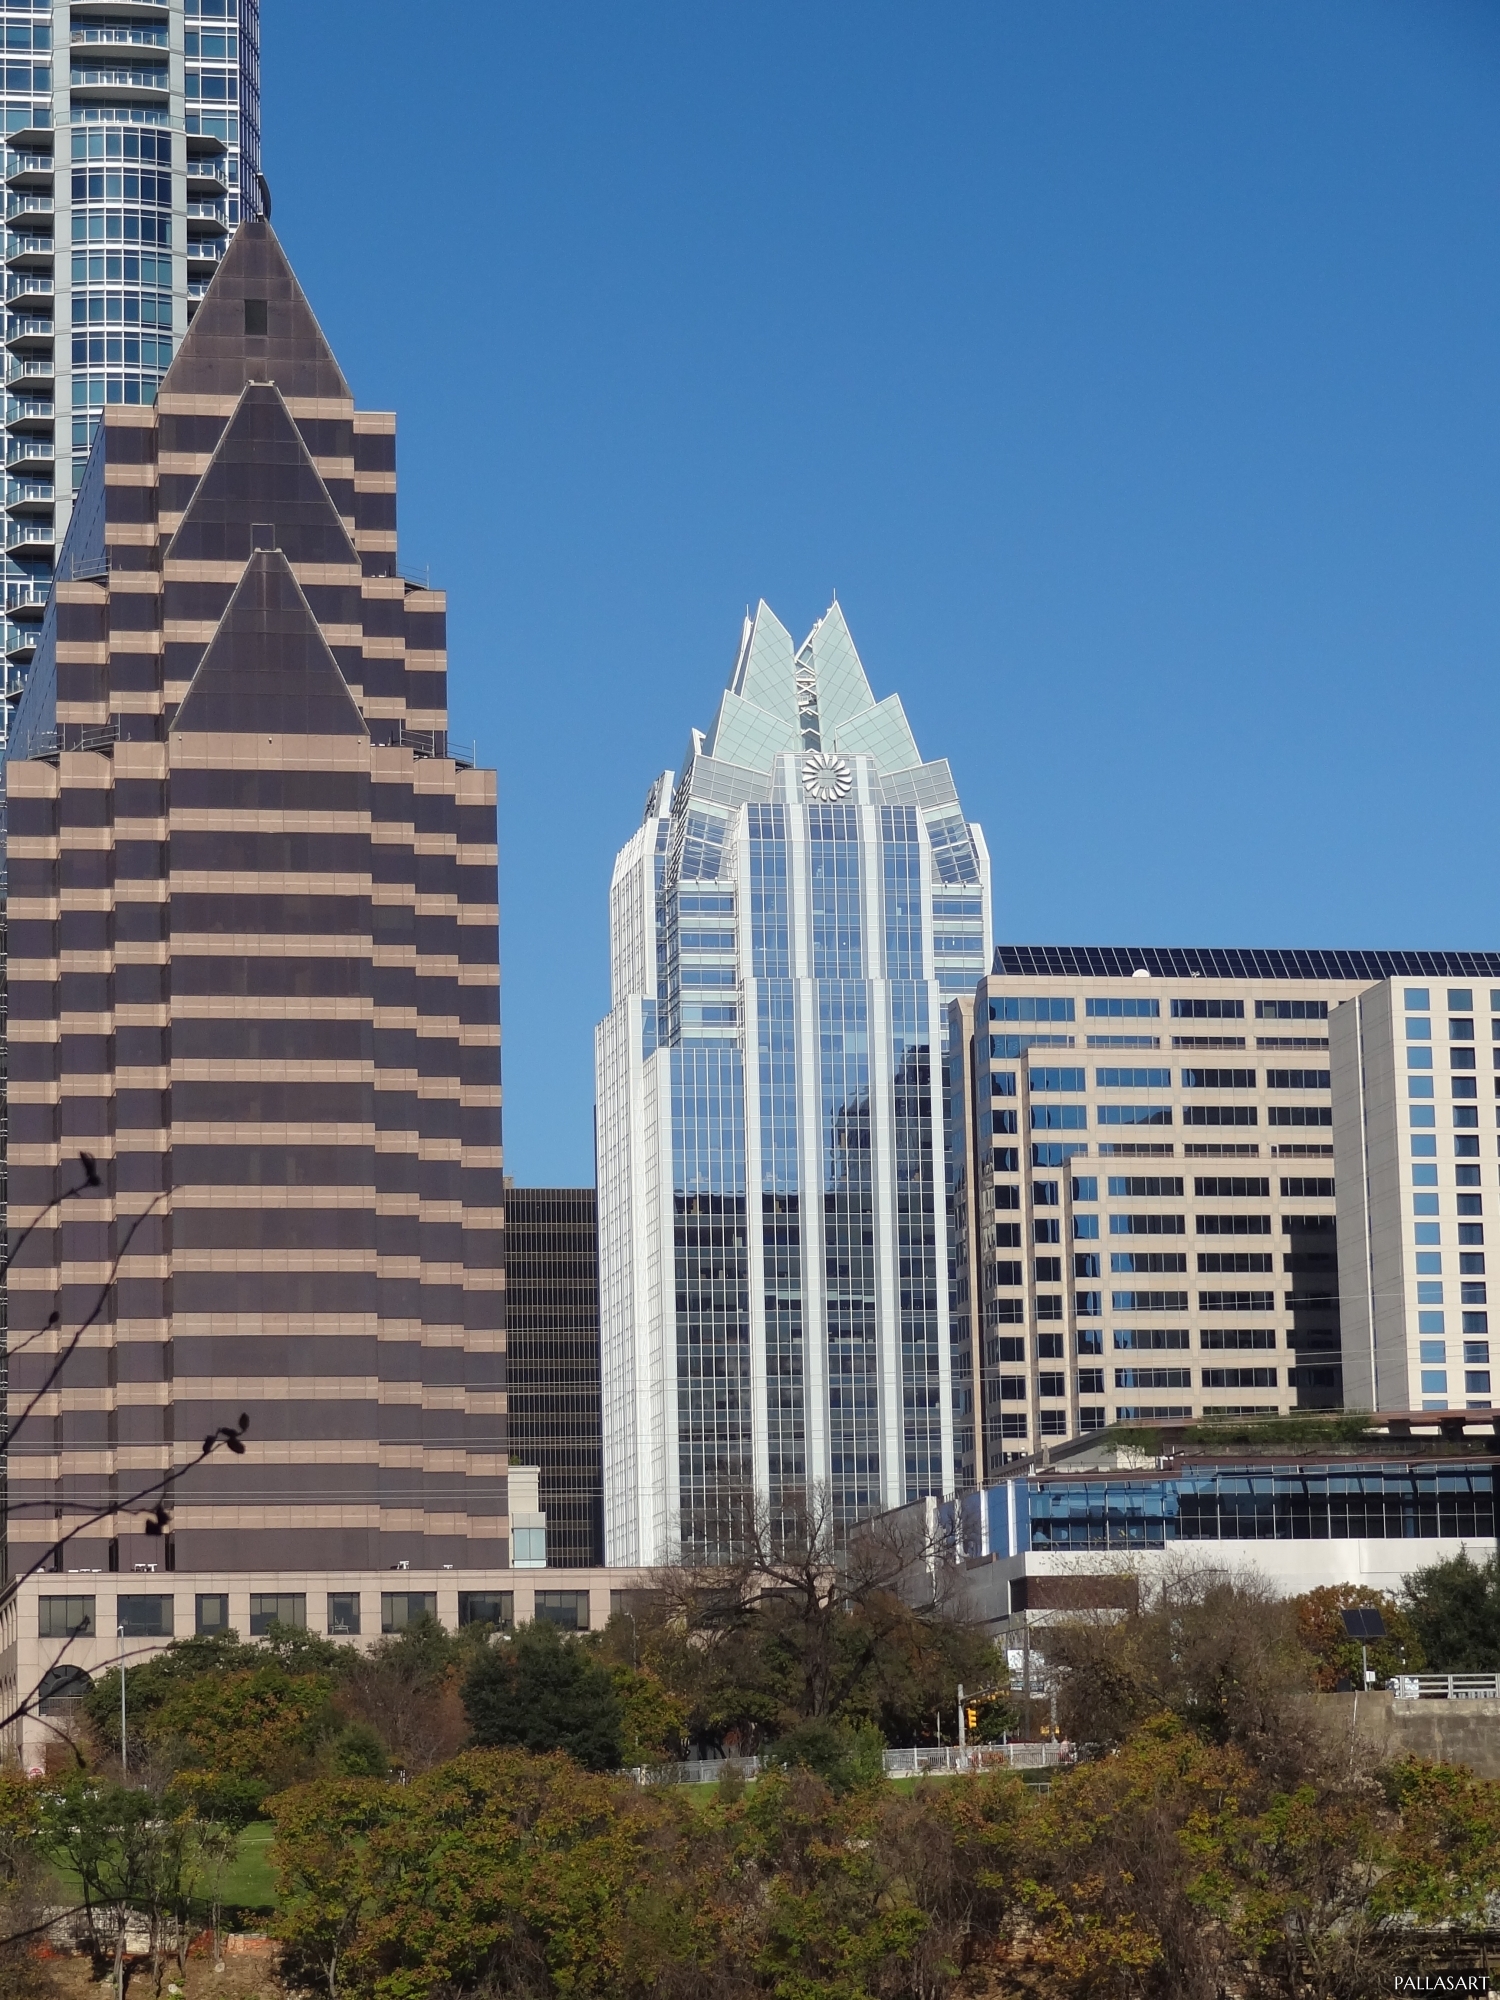 Congress Avenue Buildings in Austin